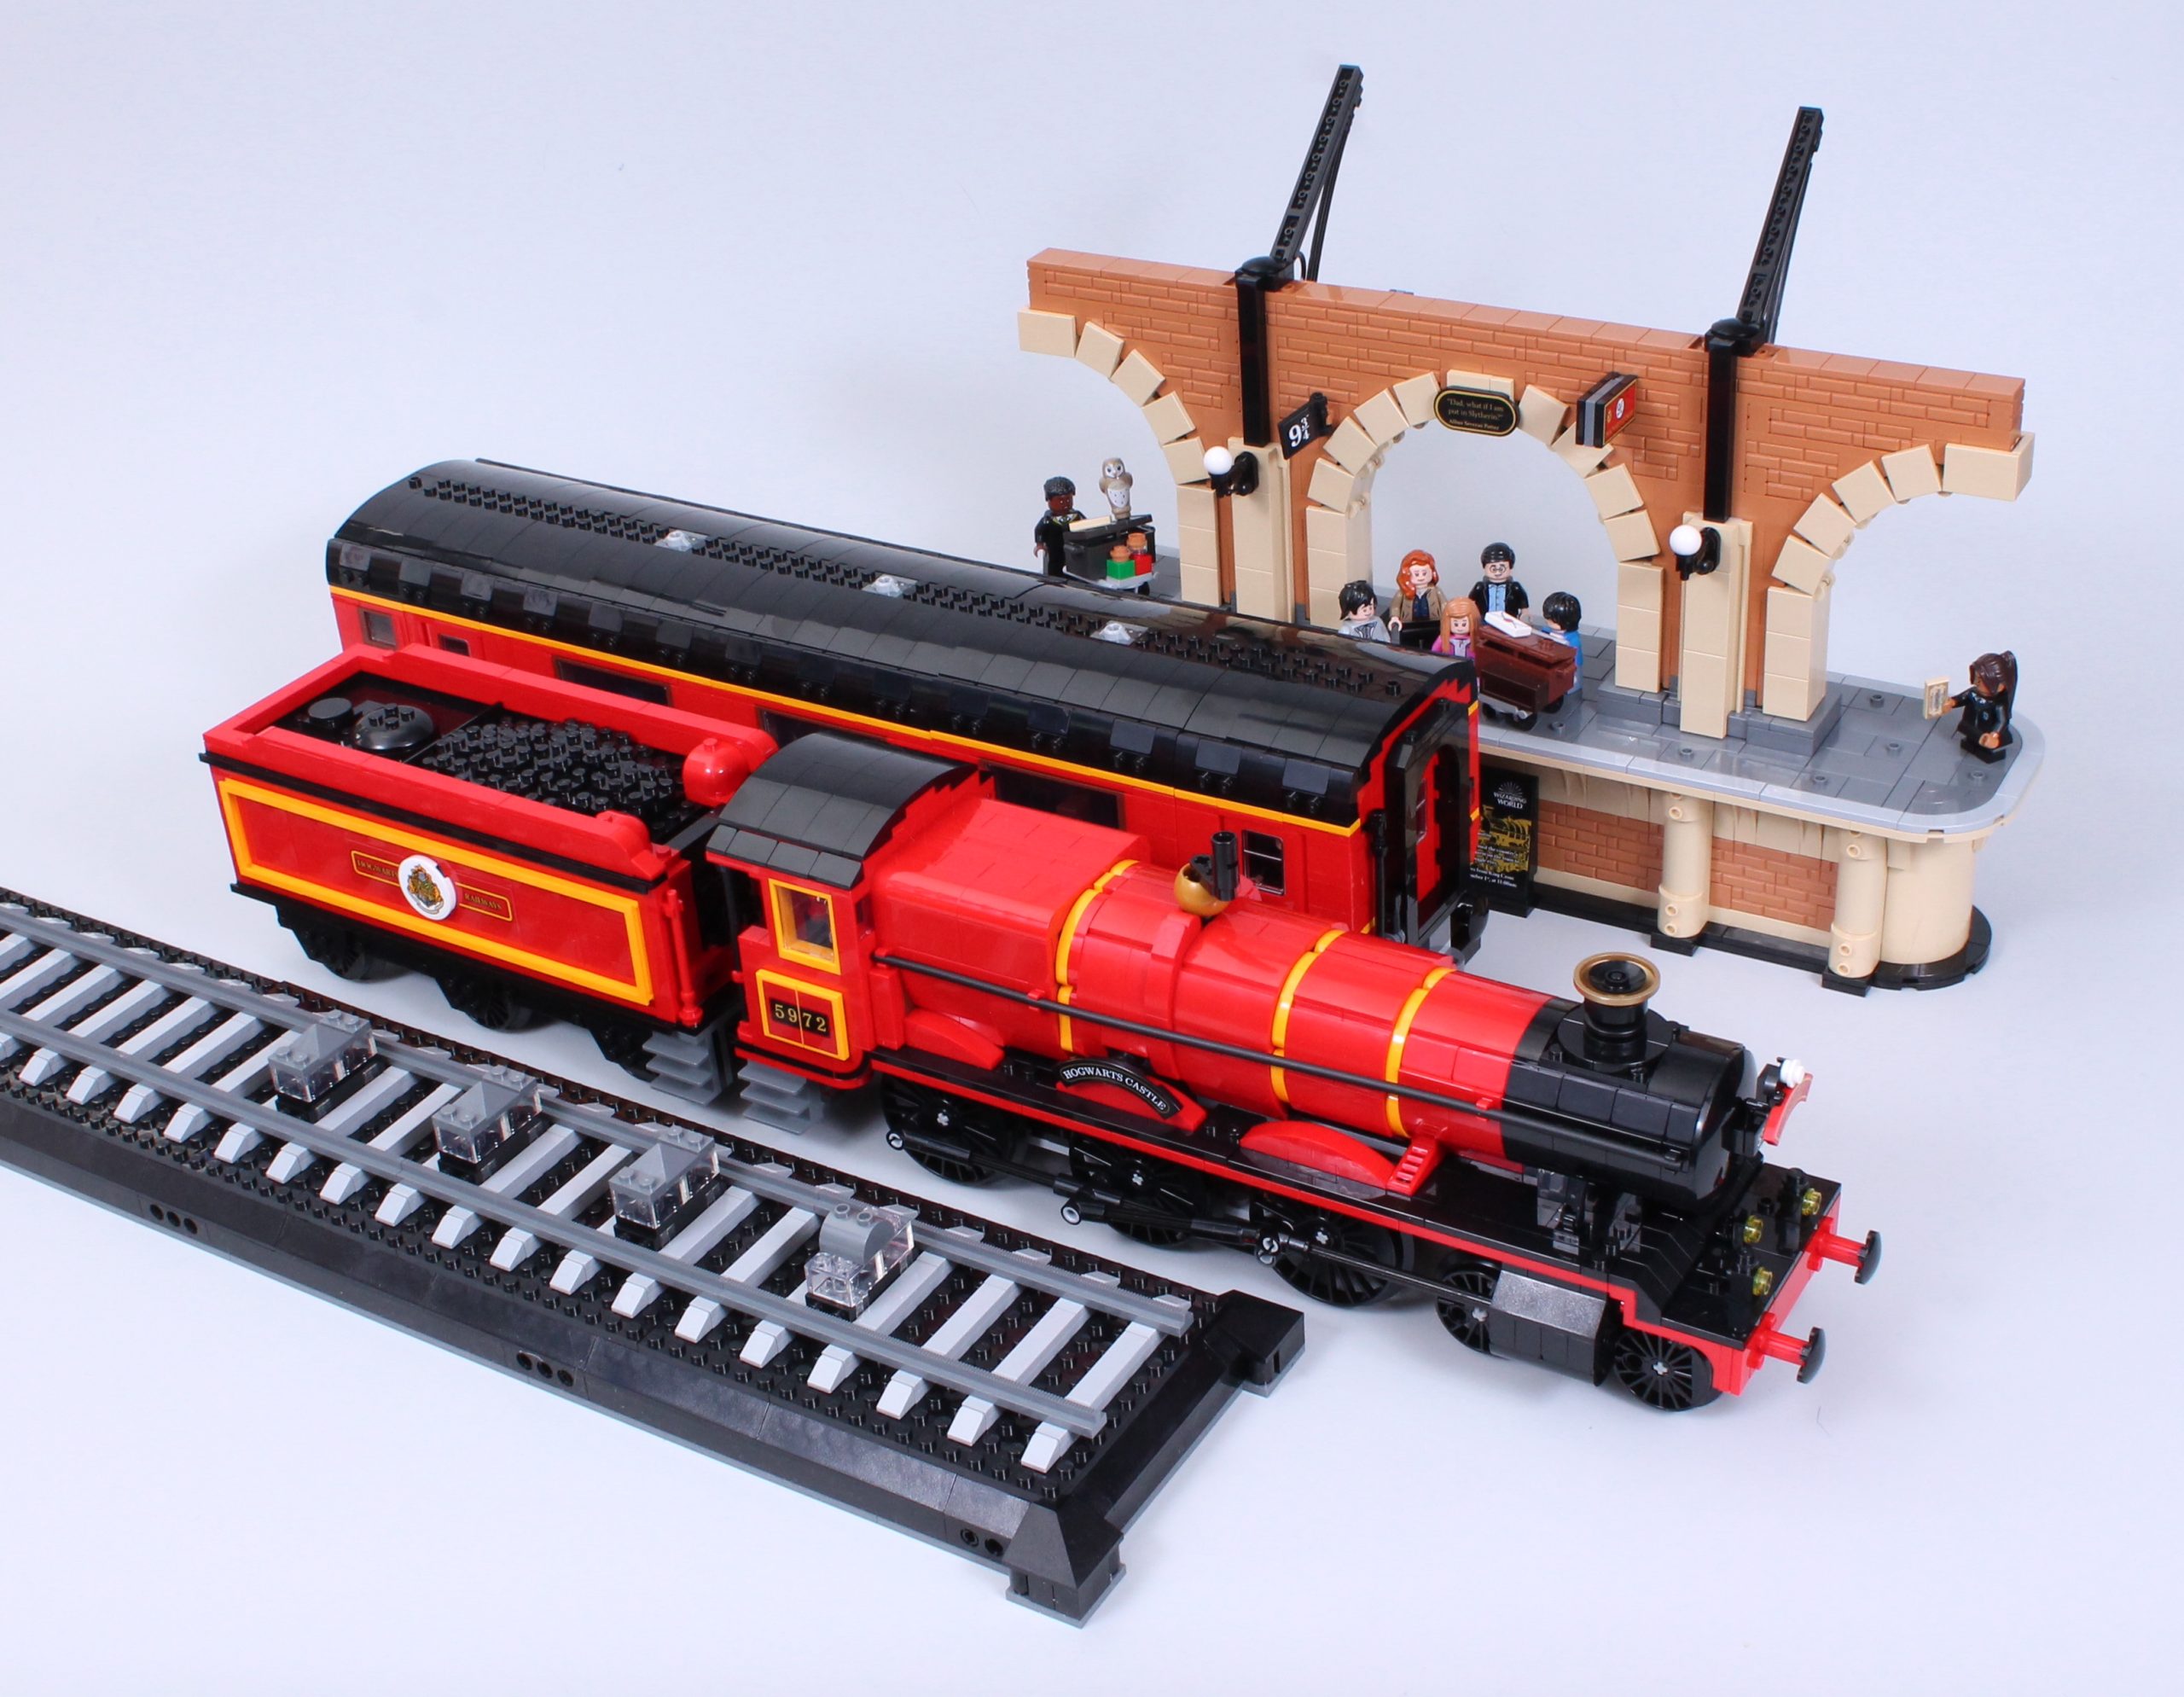 $100 vs $500 LEGO Harry Potter HOGWARTS EXPRESS Comparison! 